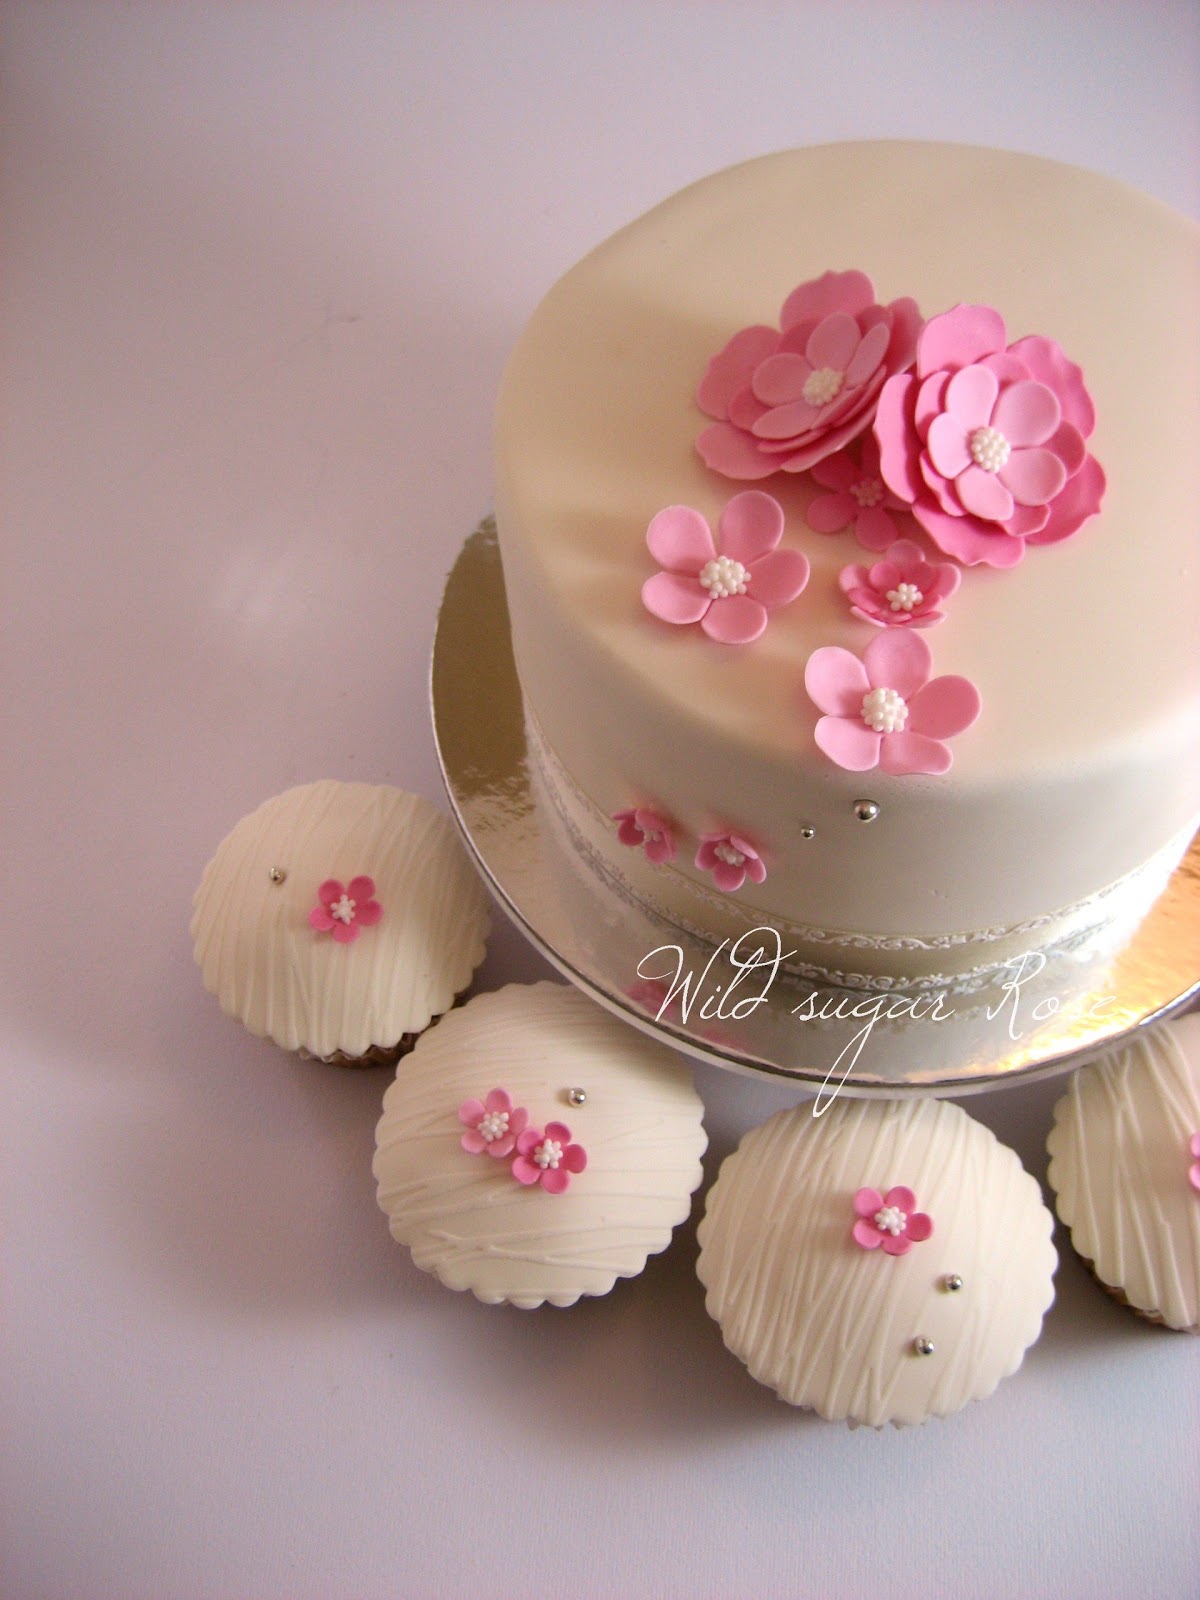 Wild sugar Rose wedding cakes, cupcakes and cake